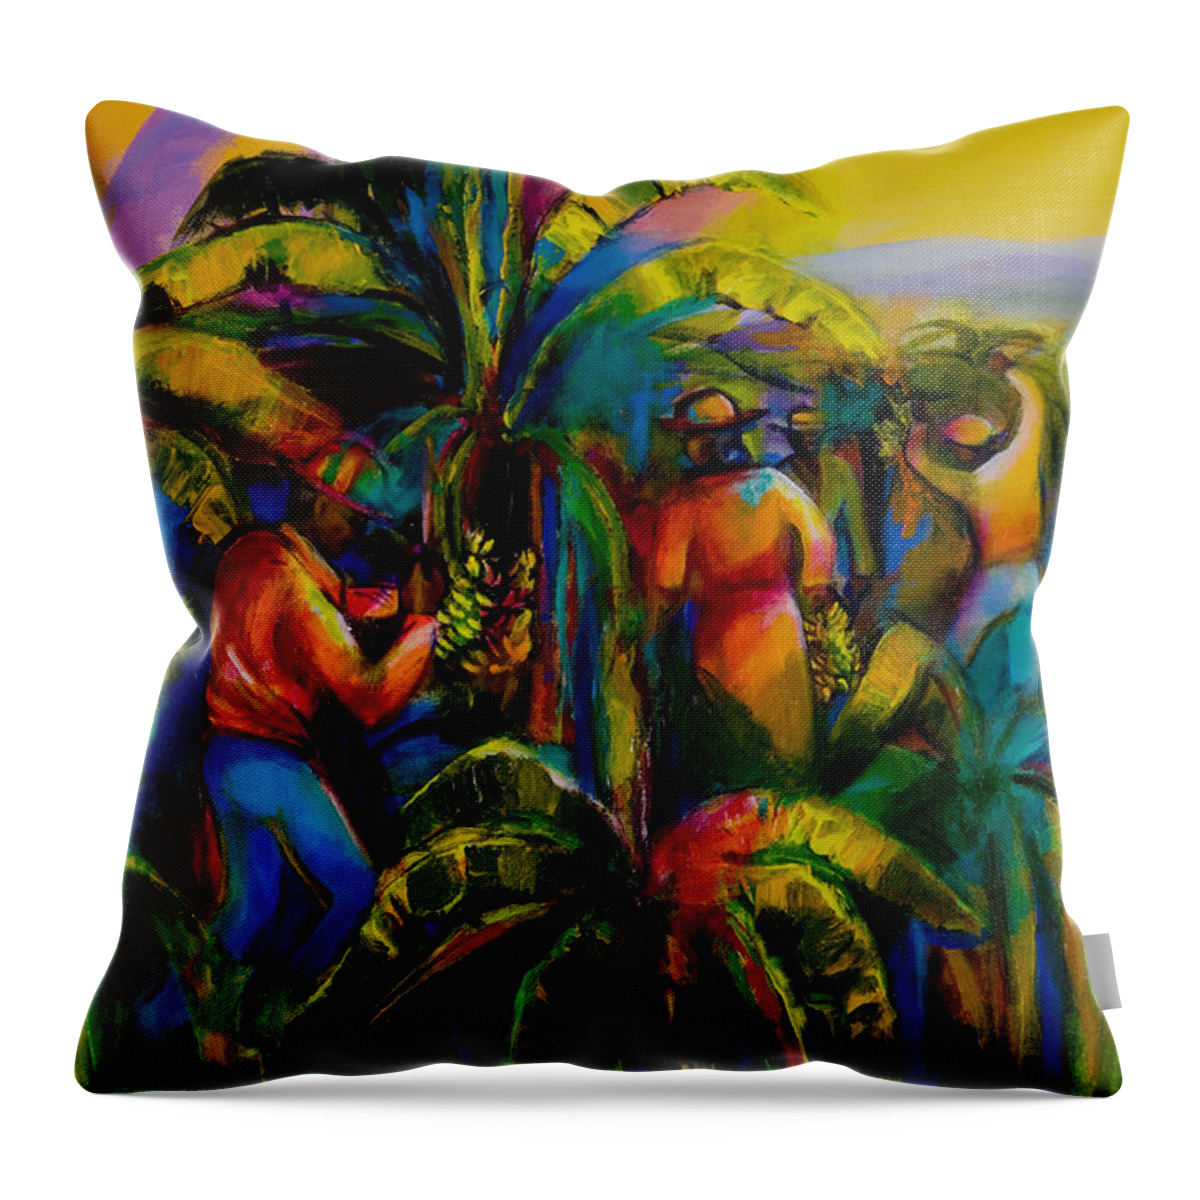 Banana Throw Pillow featuring the painting Banana Plantation by Cynthia McLean